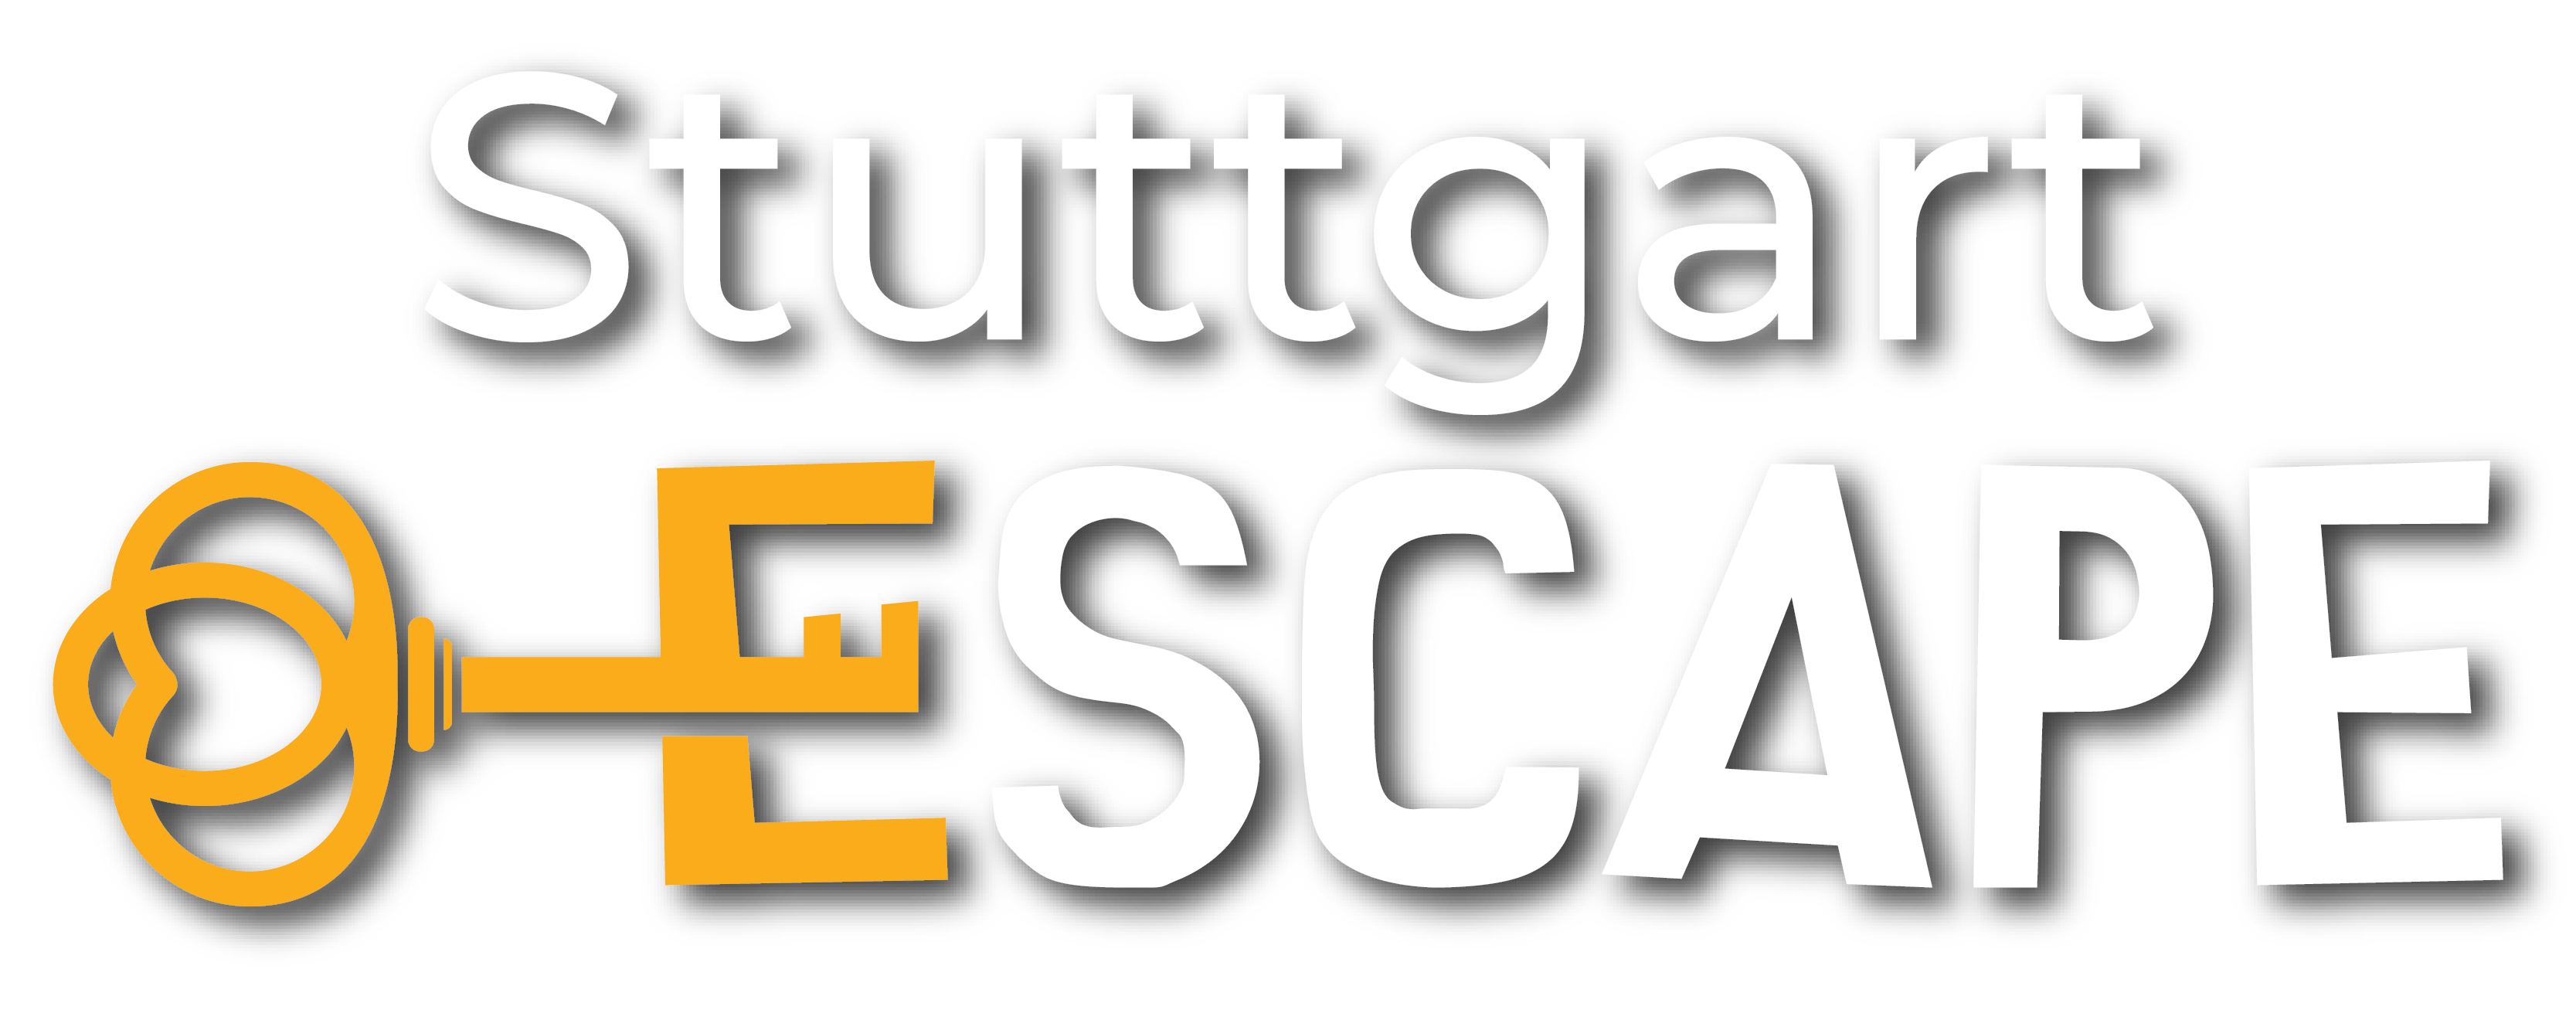 Stuttgart Escape